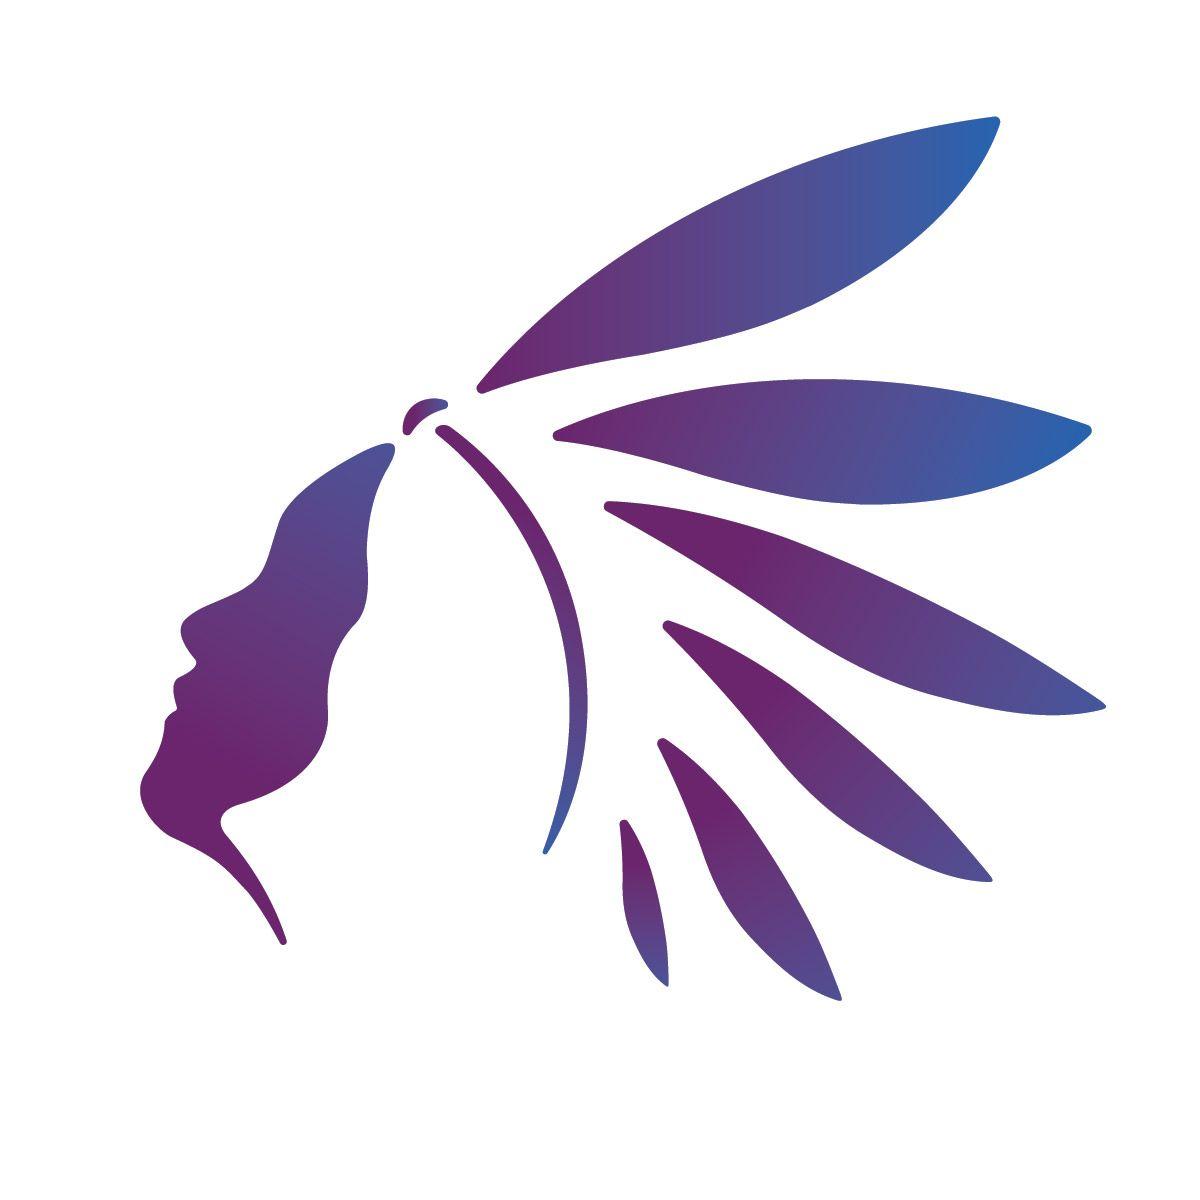 Native Logo - Native american logo for a membership program called 